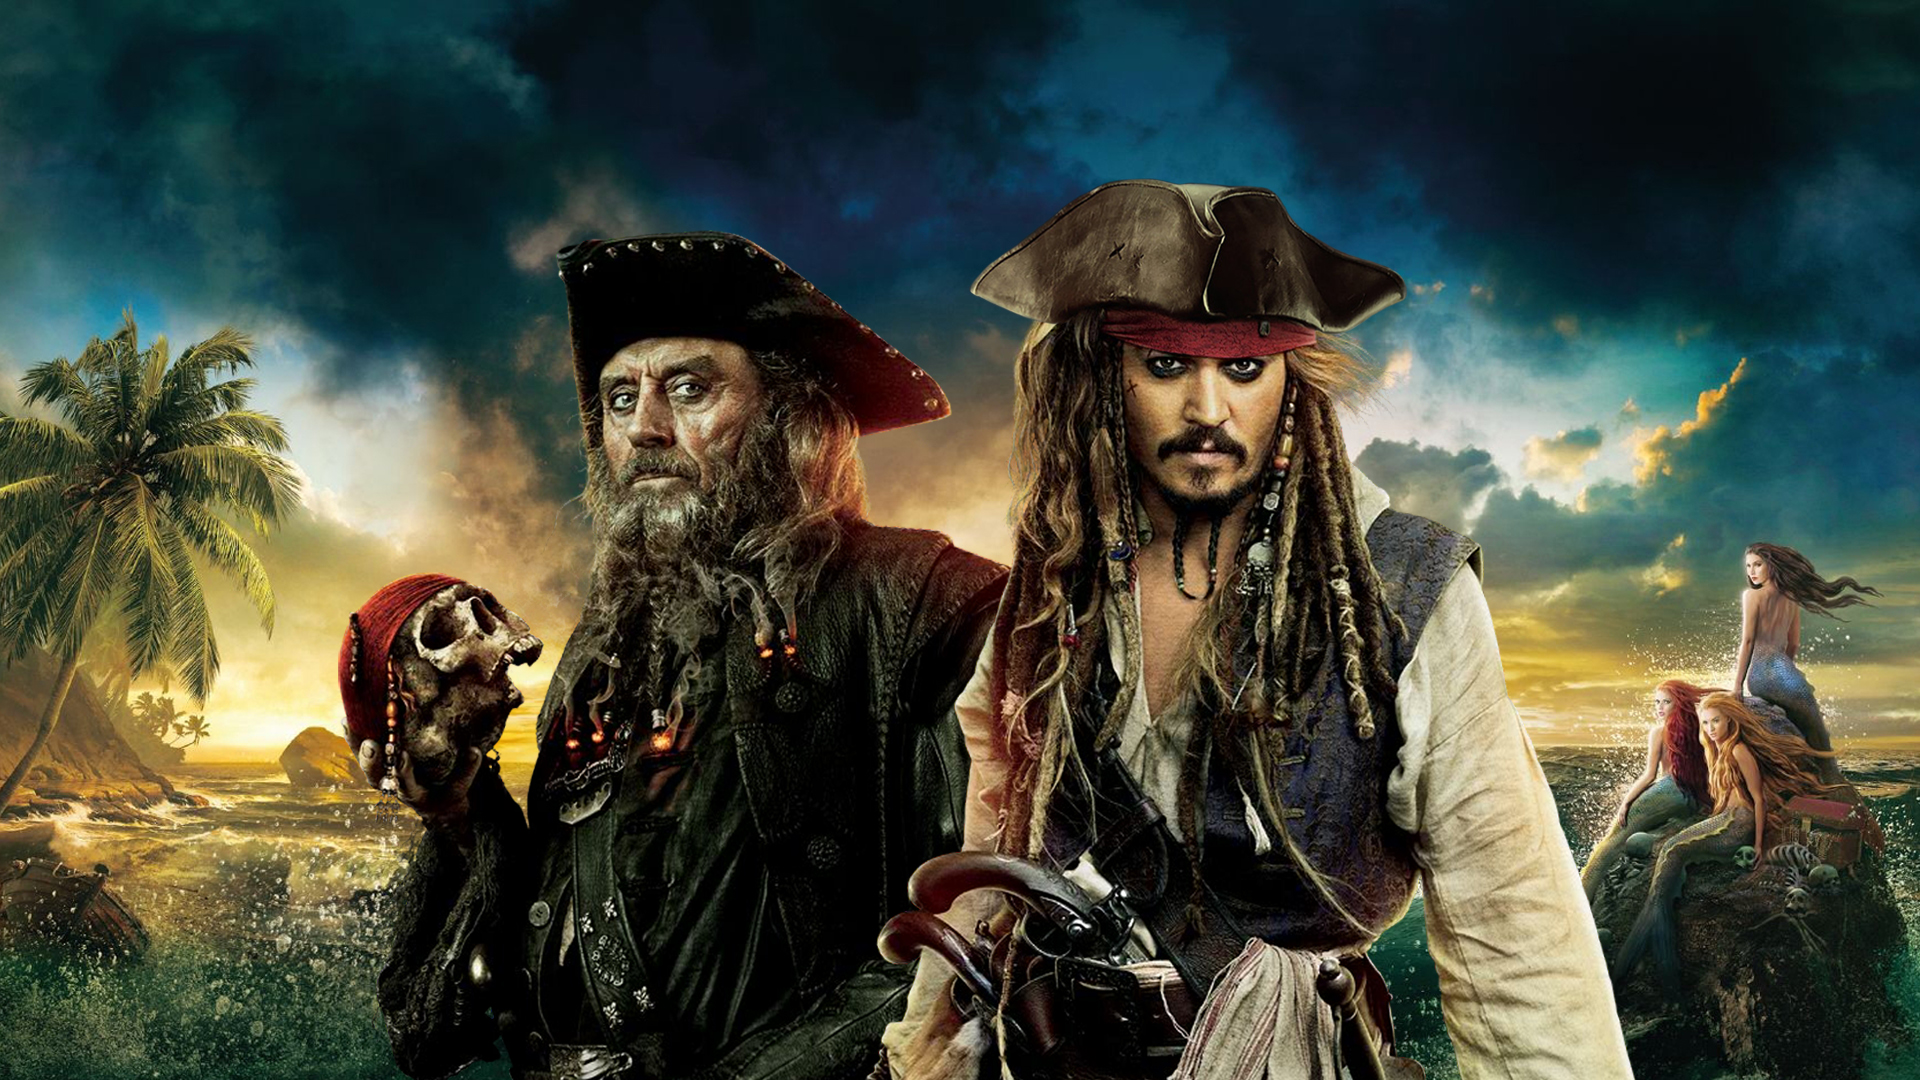 Pirates of the caribbean 4 download torrent wtc torrents hoogtewerkers